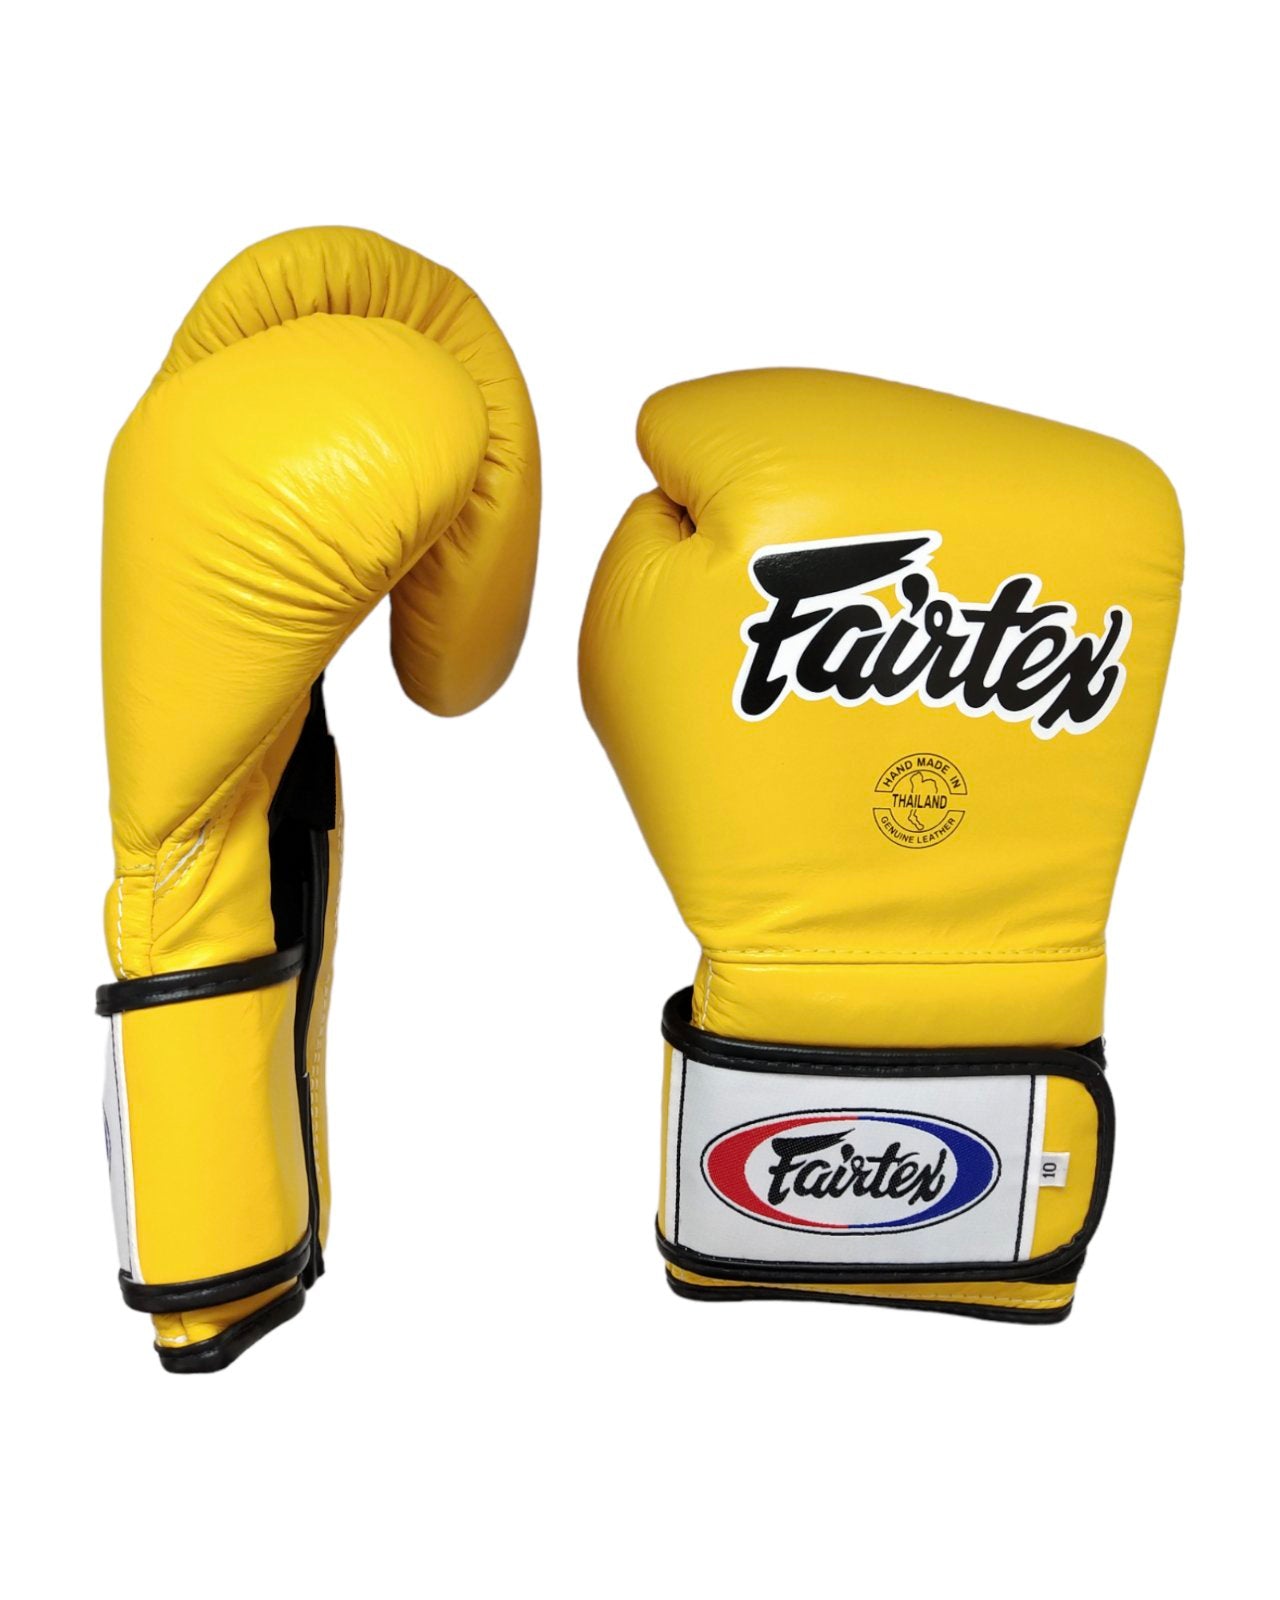 FAIRTEX BGV9 Boxing Gloves [Yellow/Black Piping]